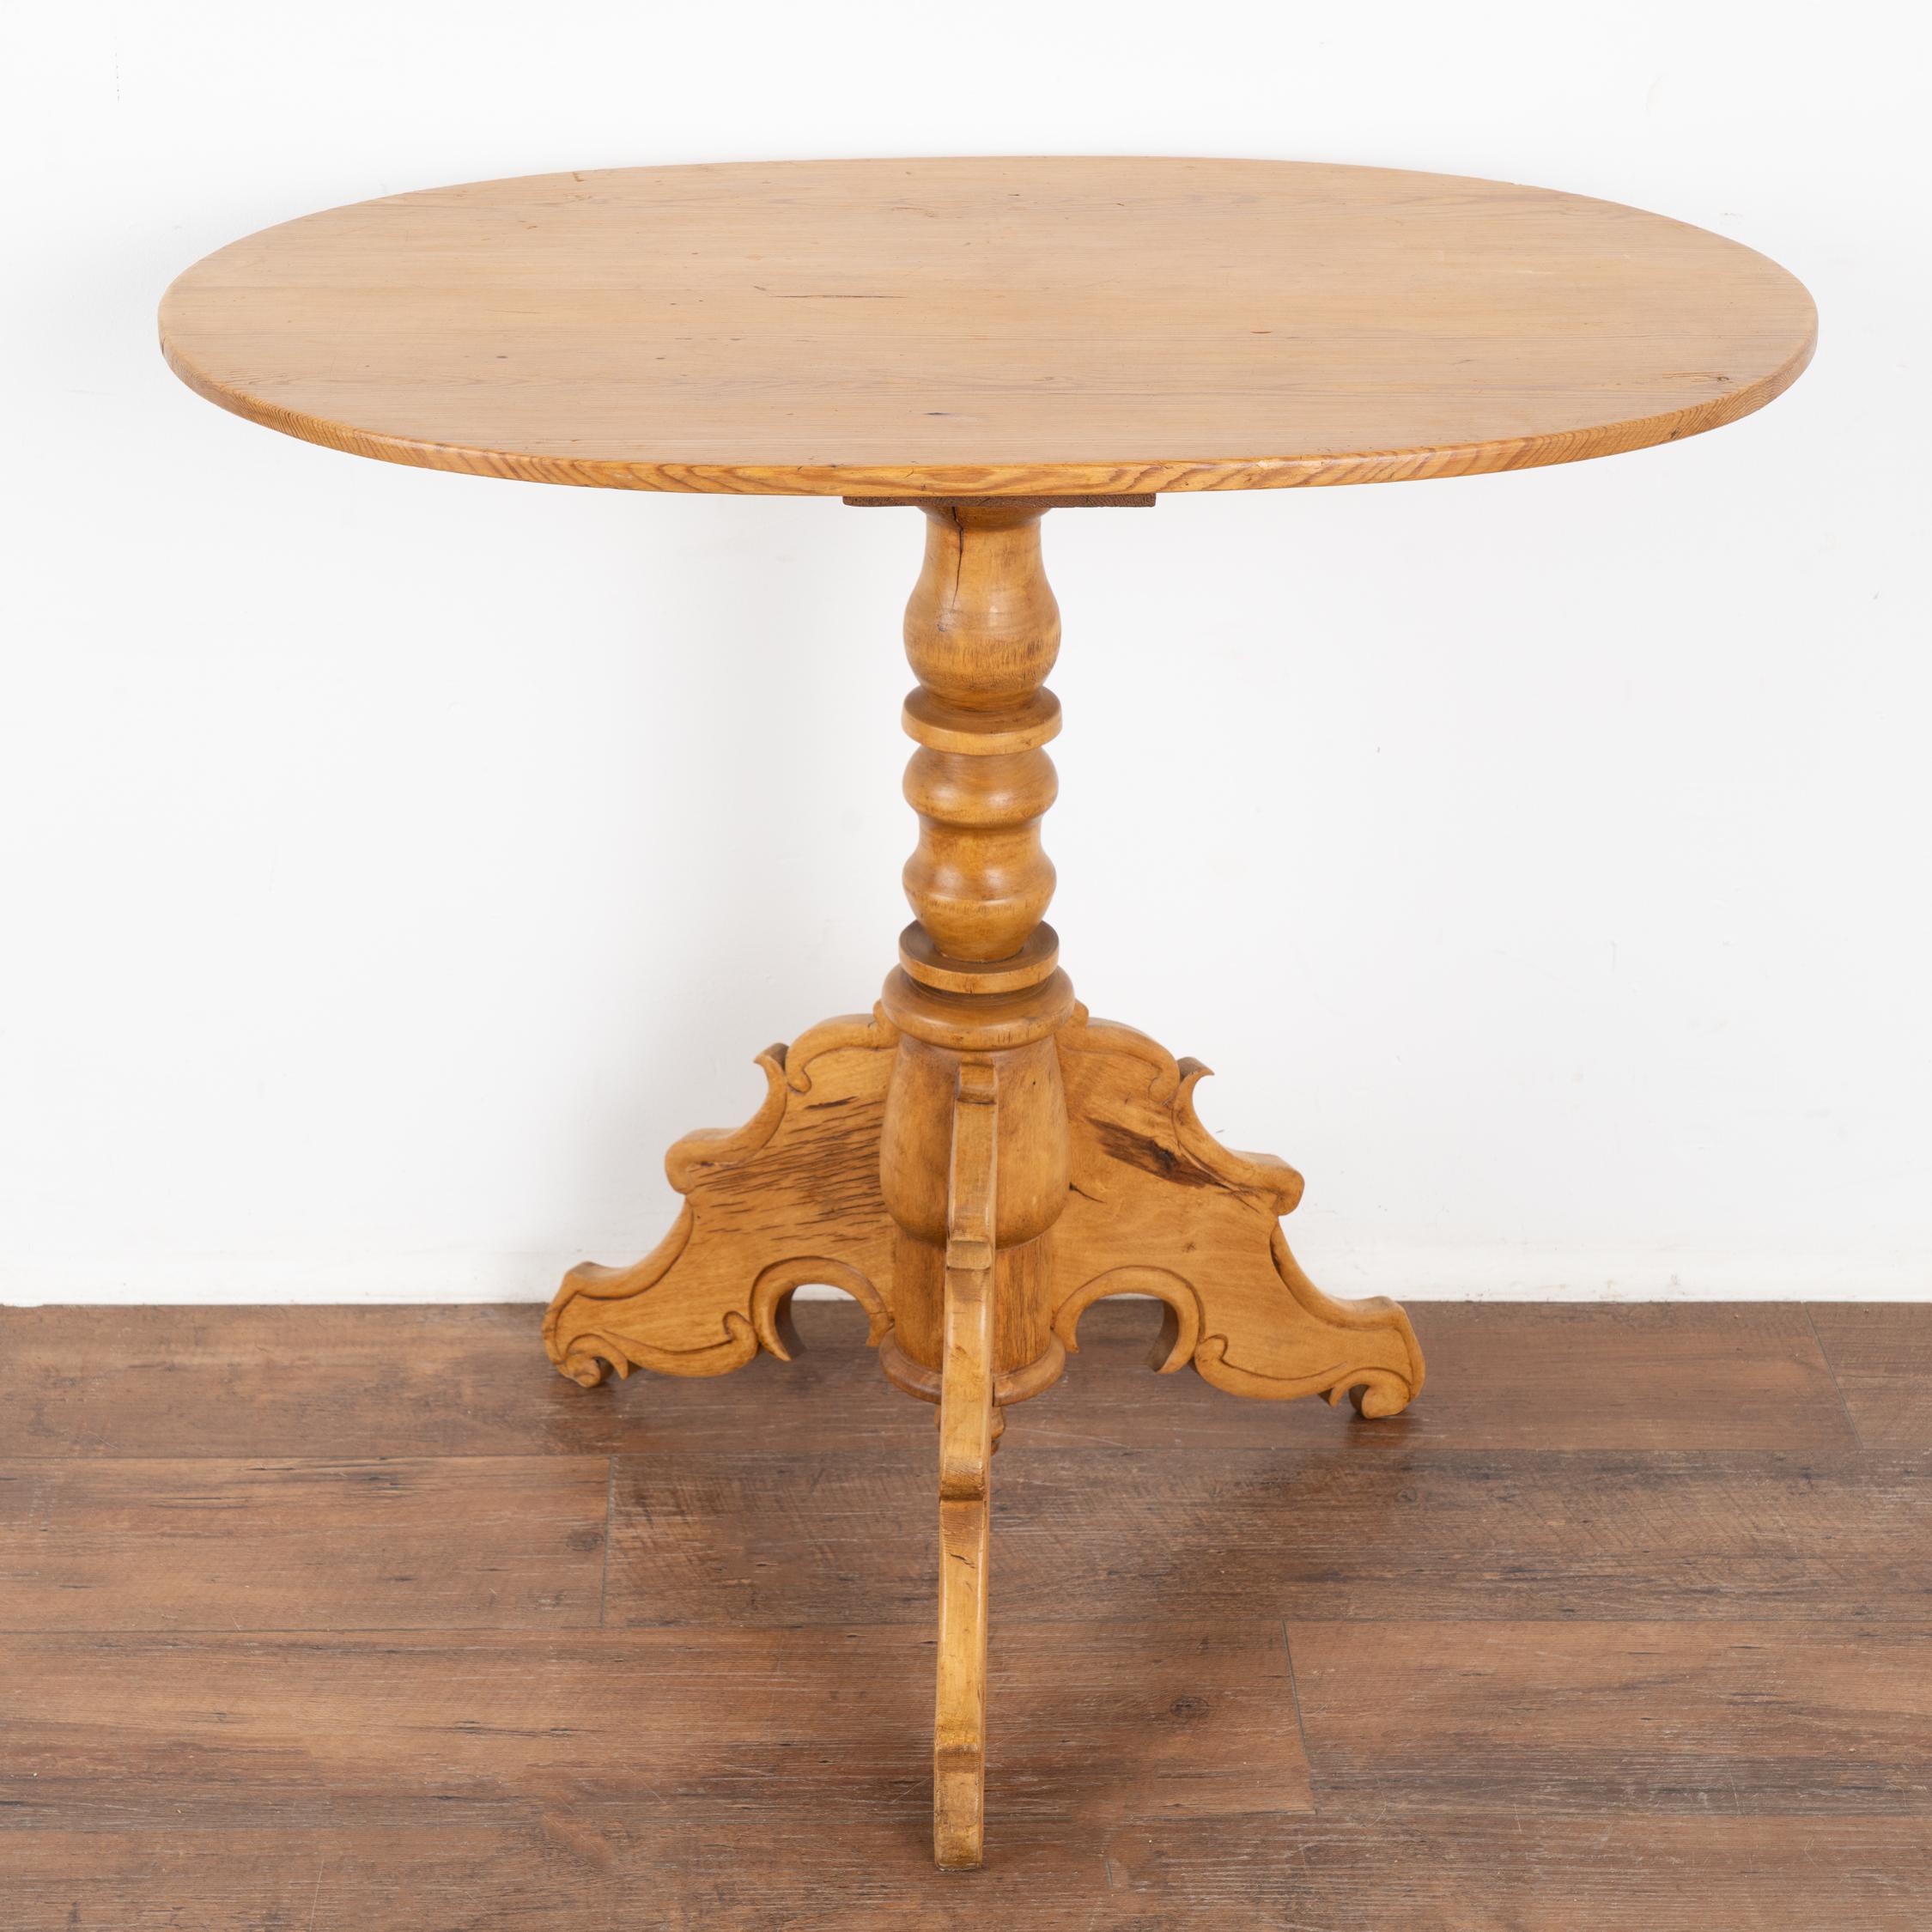 Victorian Pine Oval Tea or Pedestal Side Table, Sweden circa 1860-80